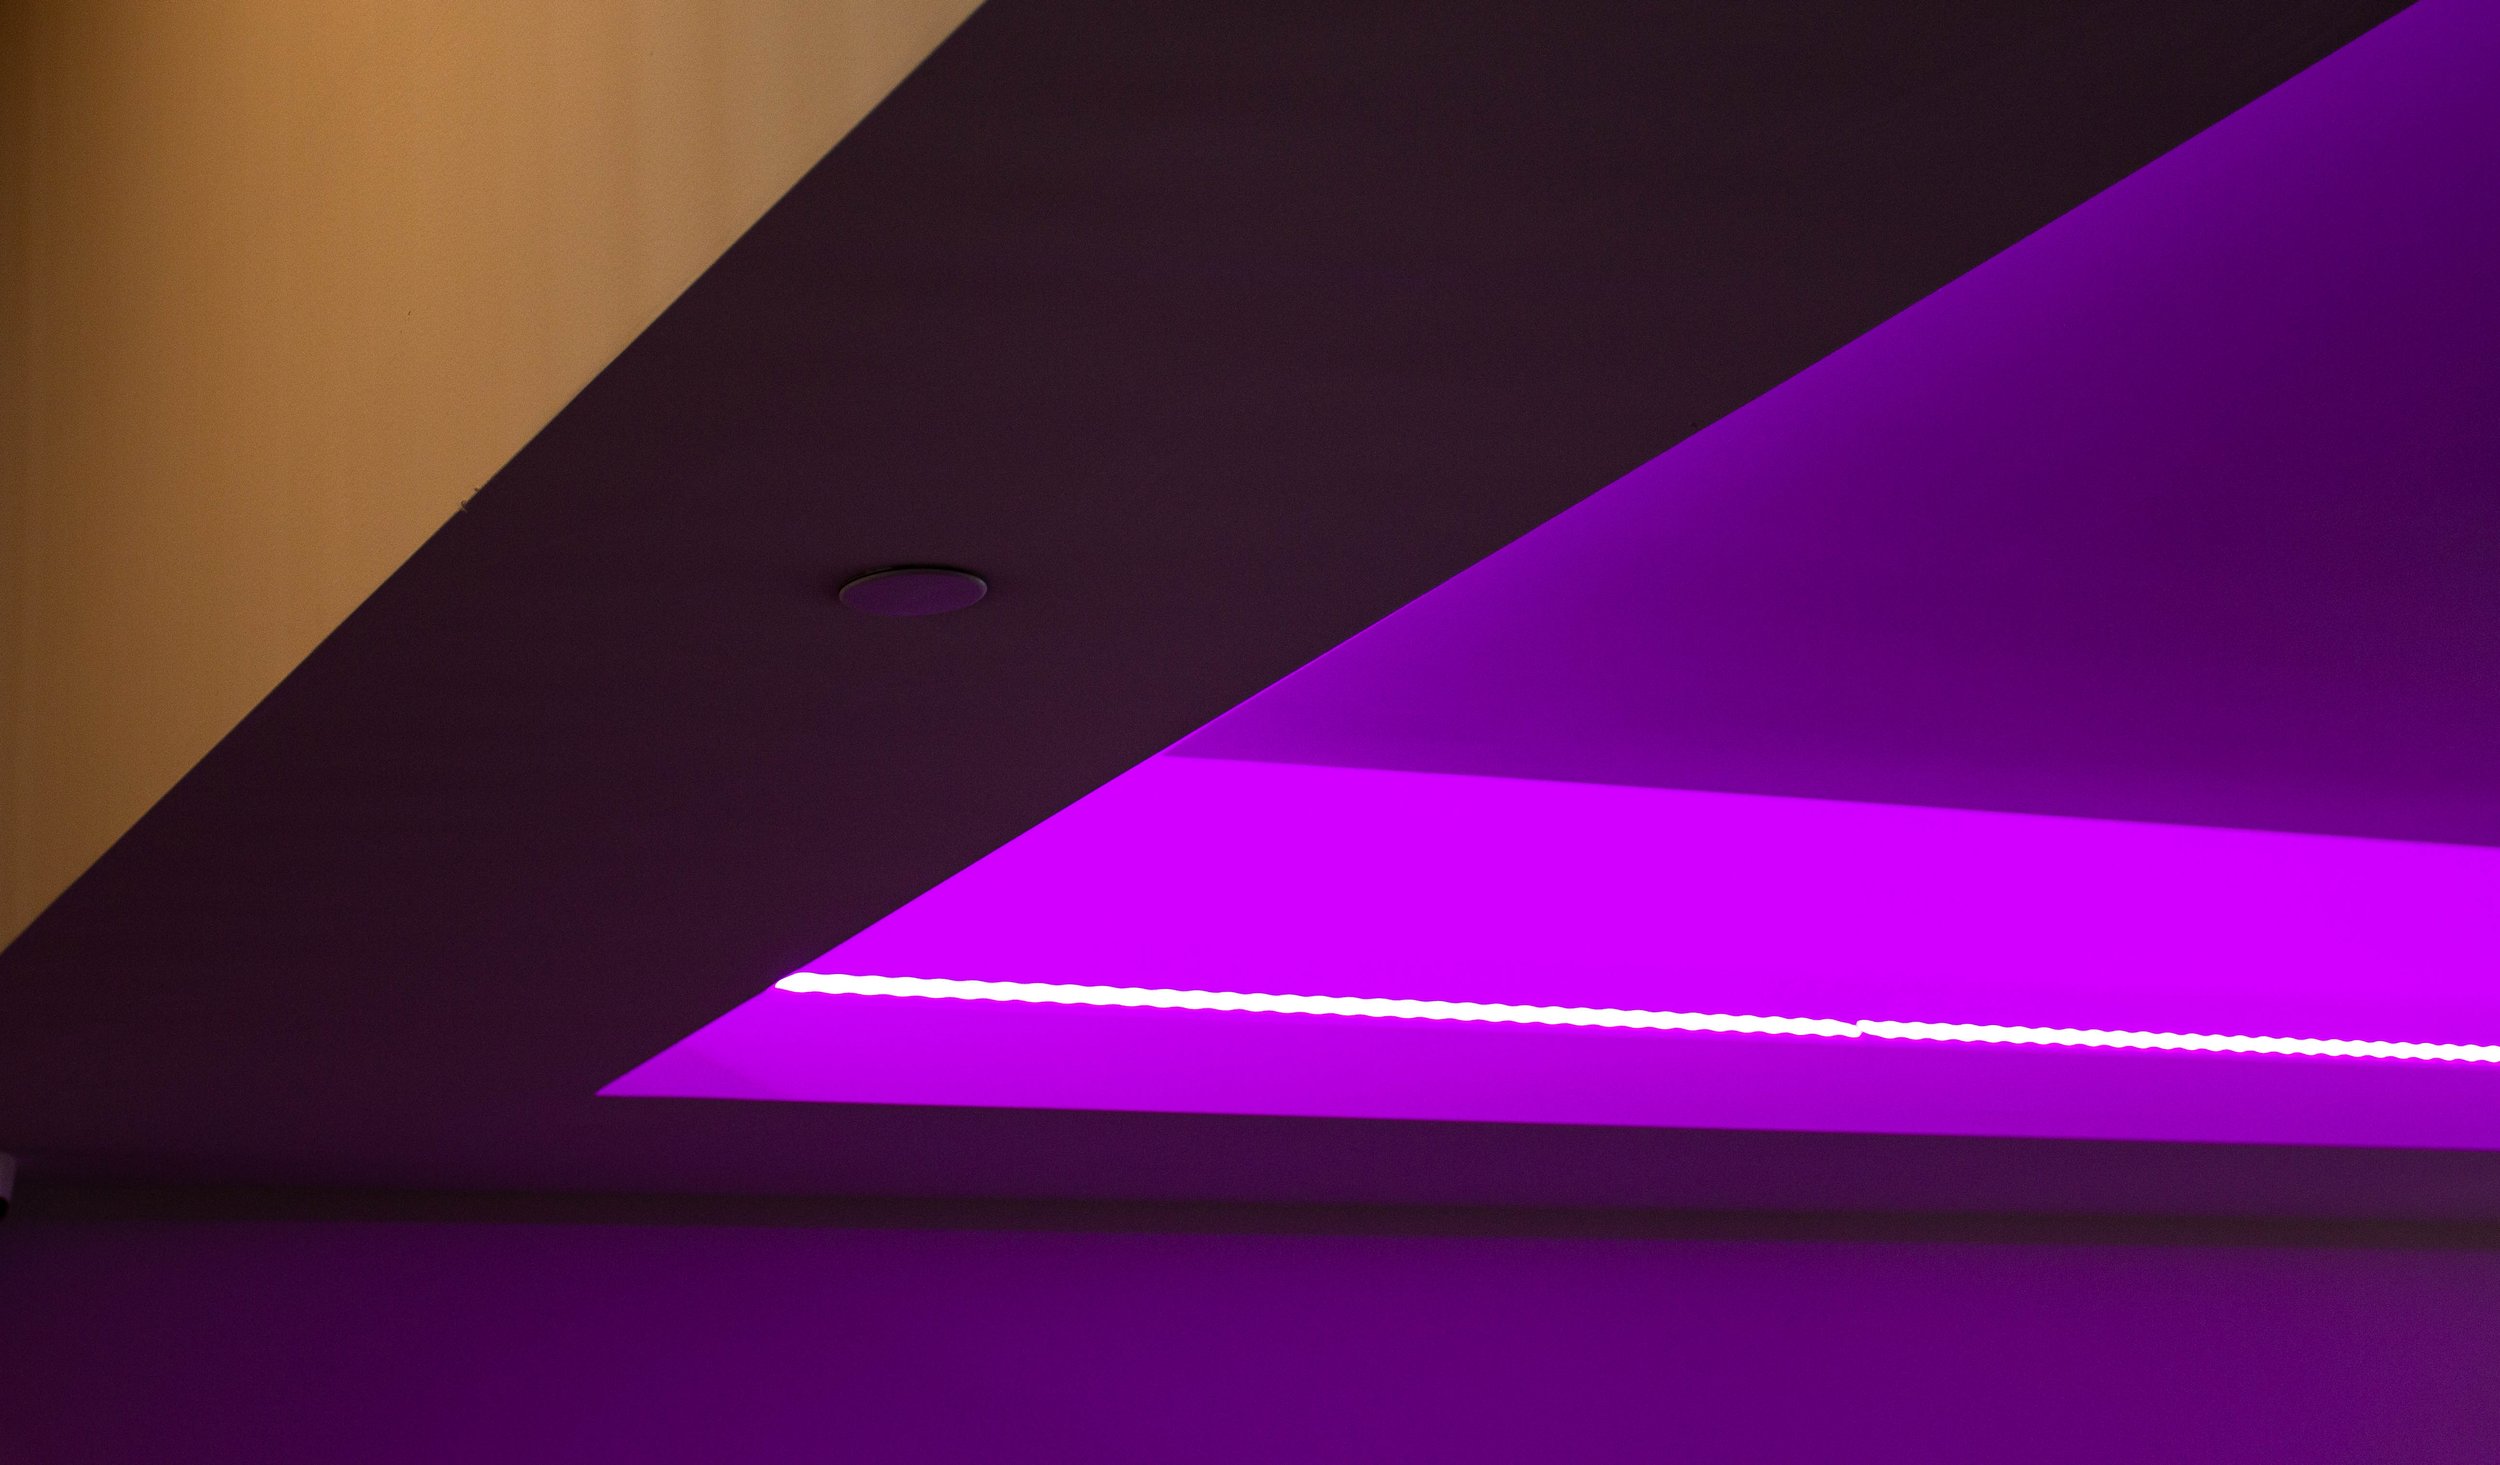  Hazel McCallion Student Centre Quiet Room ceiling with a purple lava lamp style lighting.  